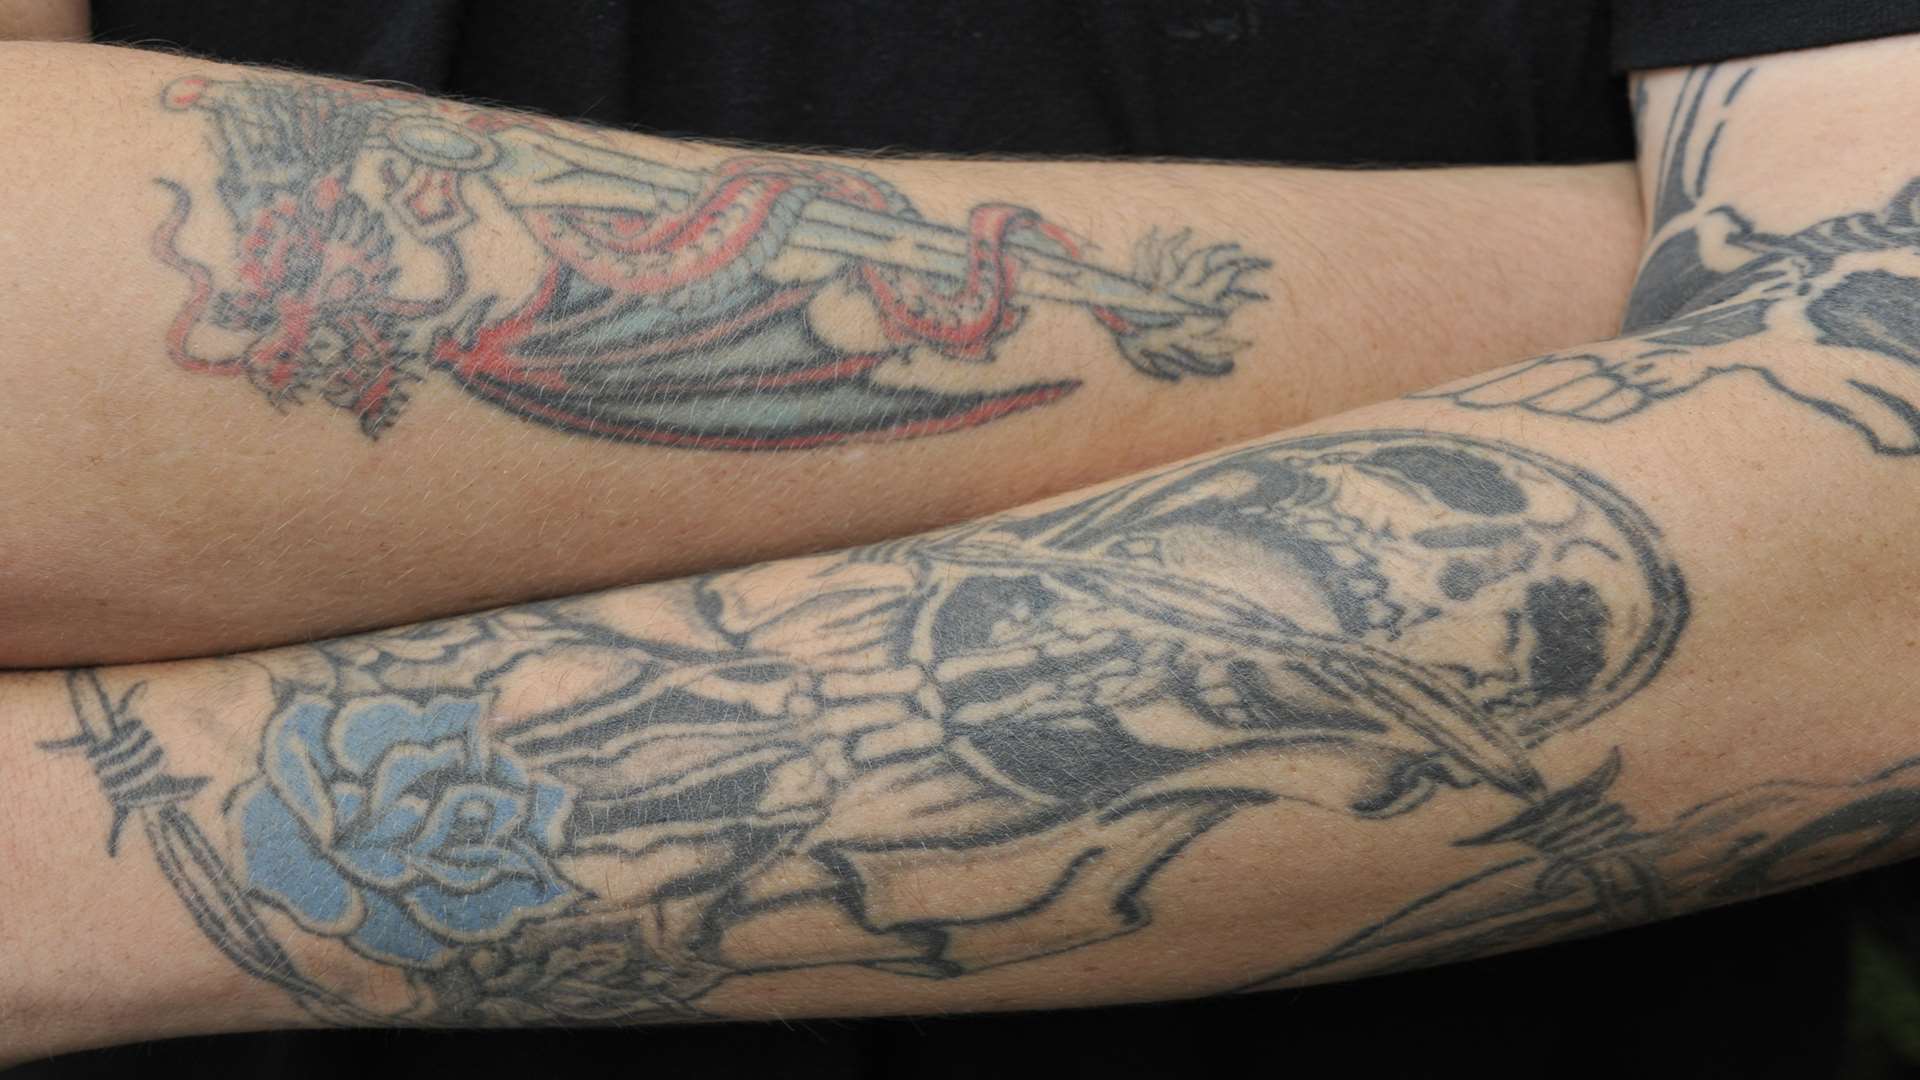 This burnt hand that reveals a fresh tattoo underneath : r/mildlyinteresting